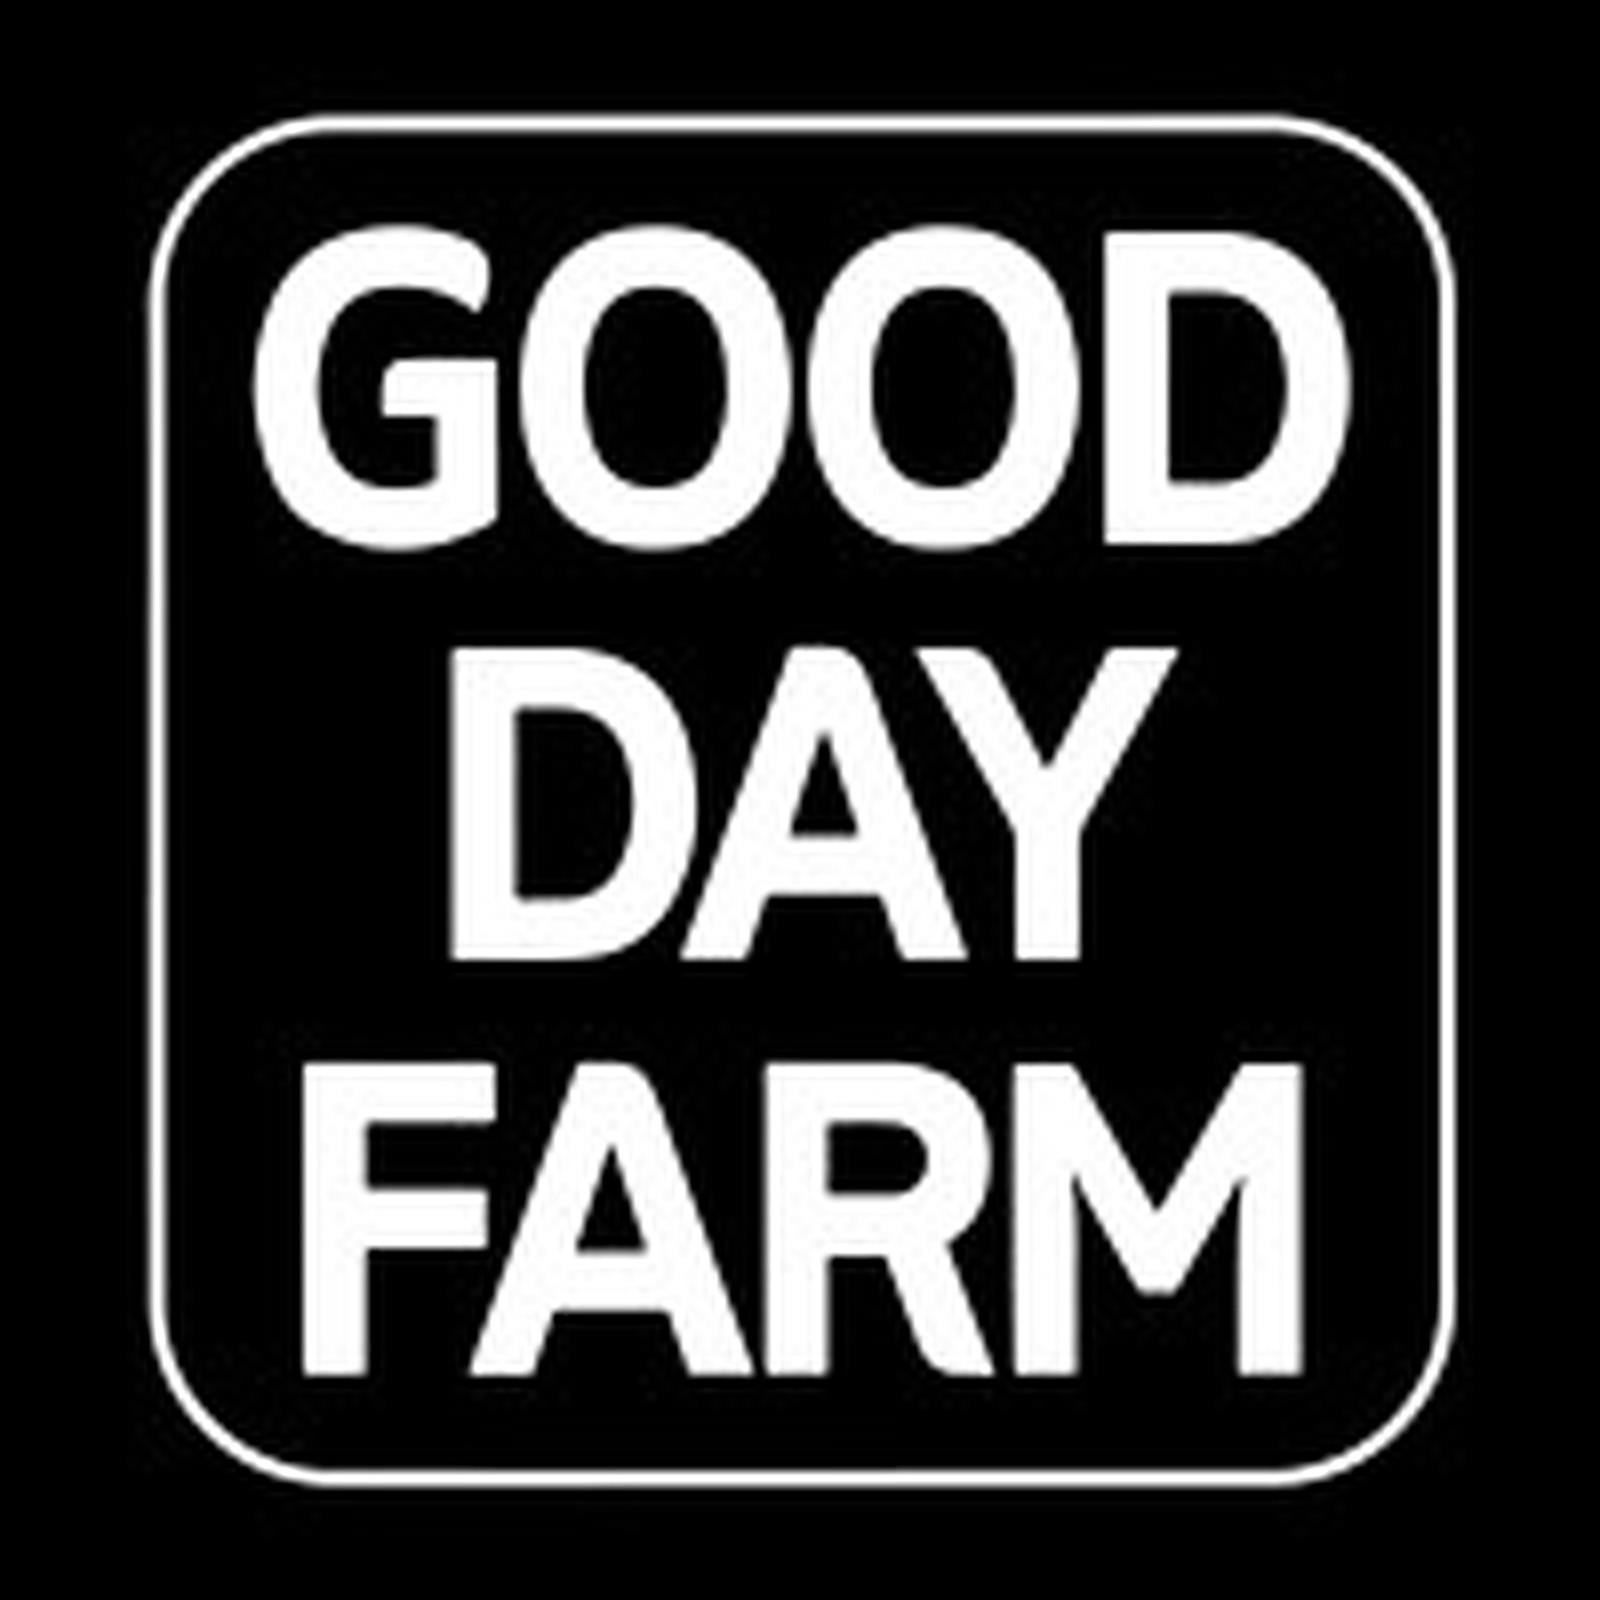 Good Day Farm